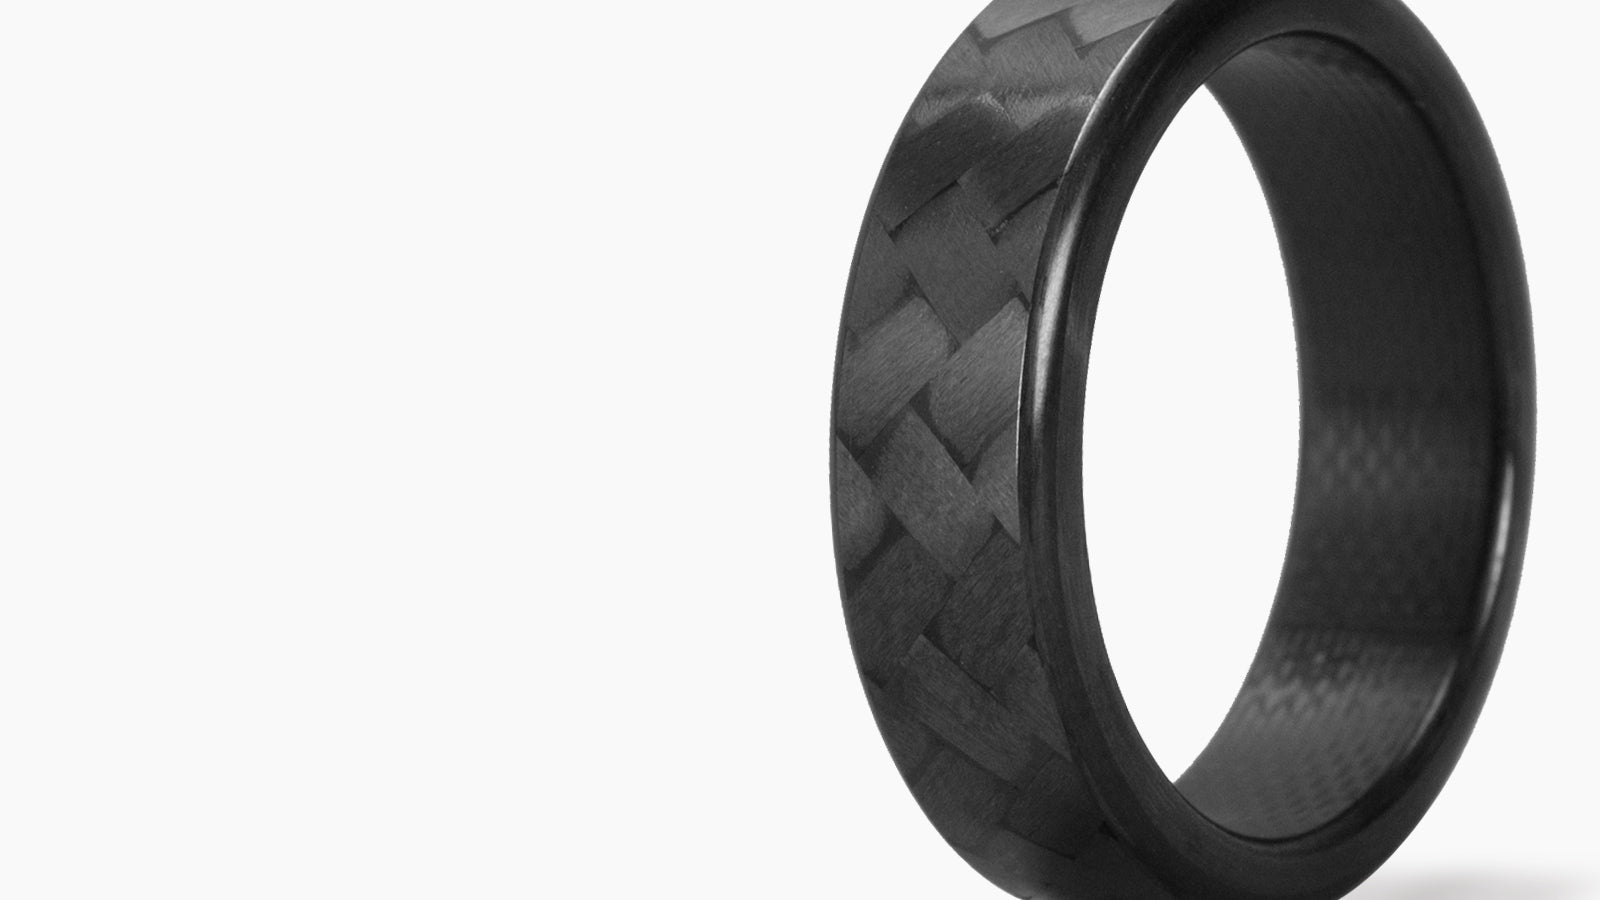 Carbon fiber ring